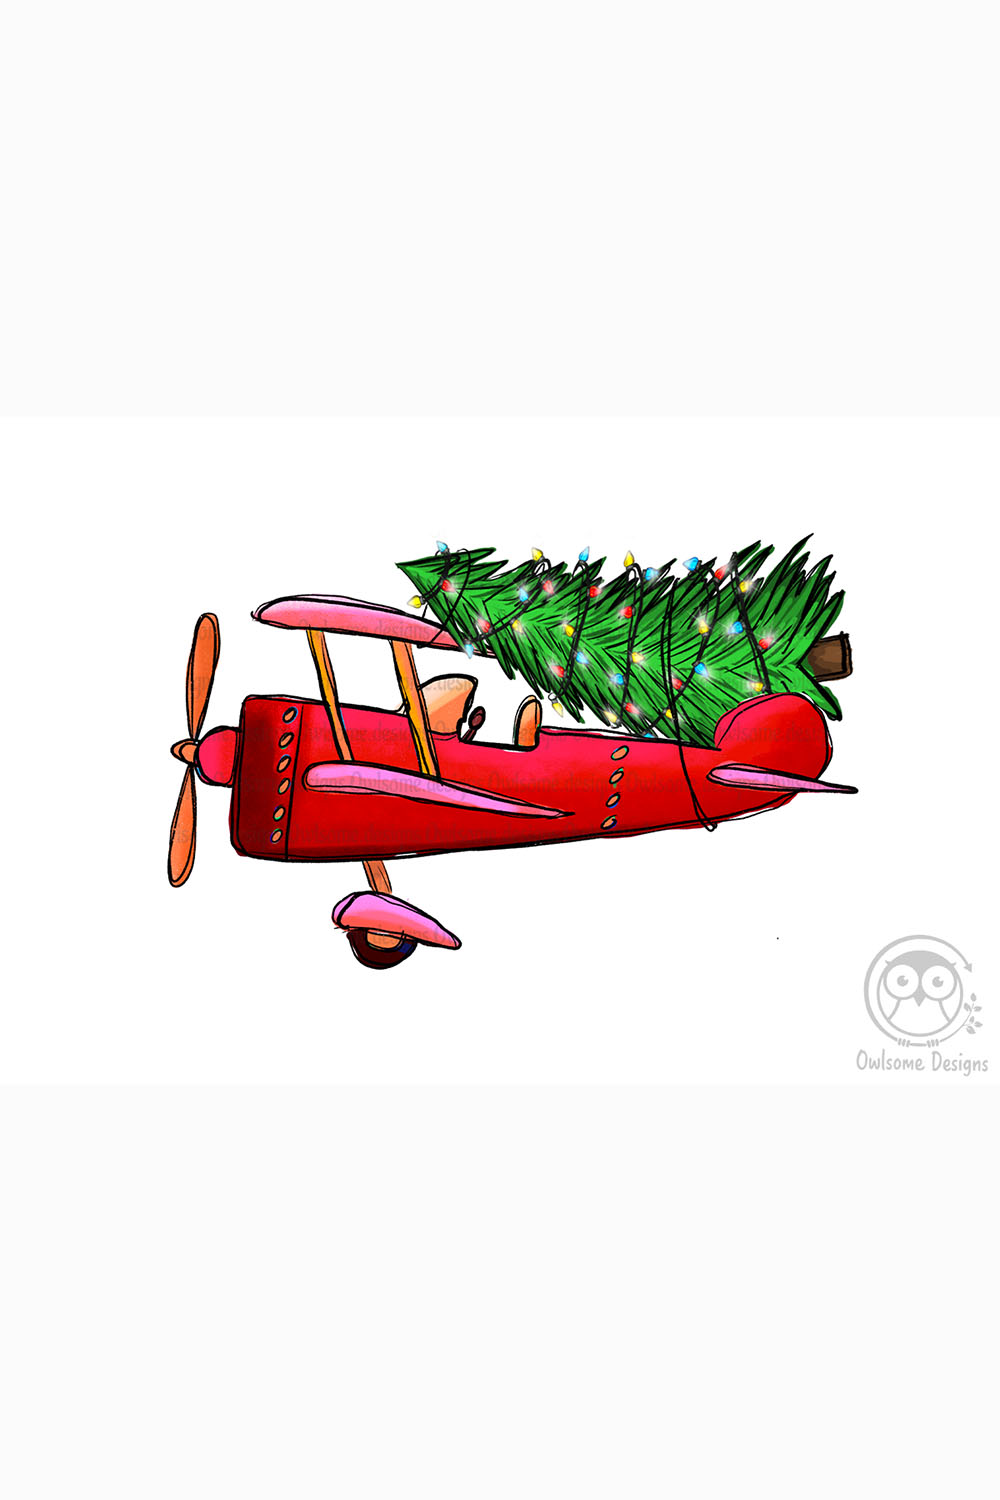 Plane Christmas Tree - Pinterest image preview.